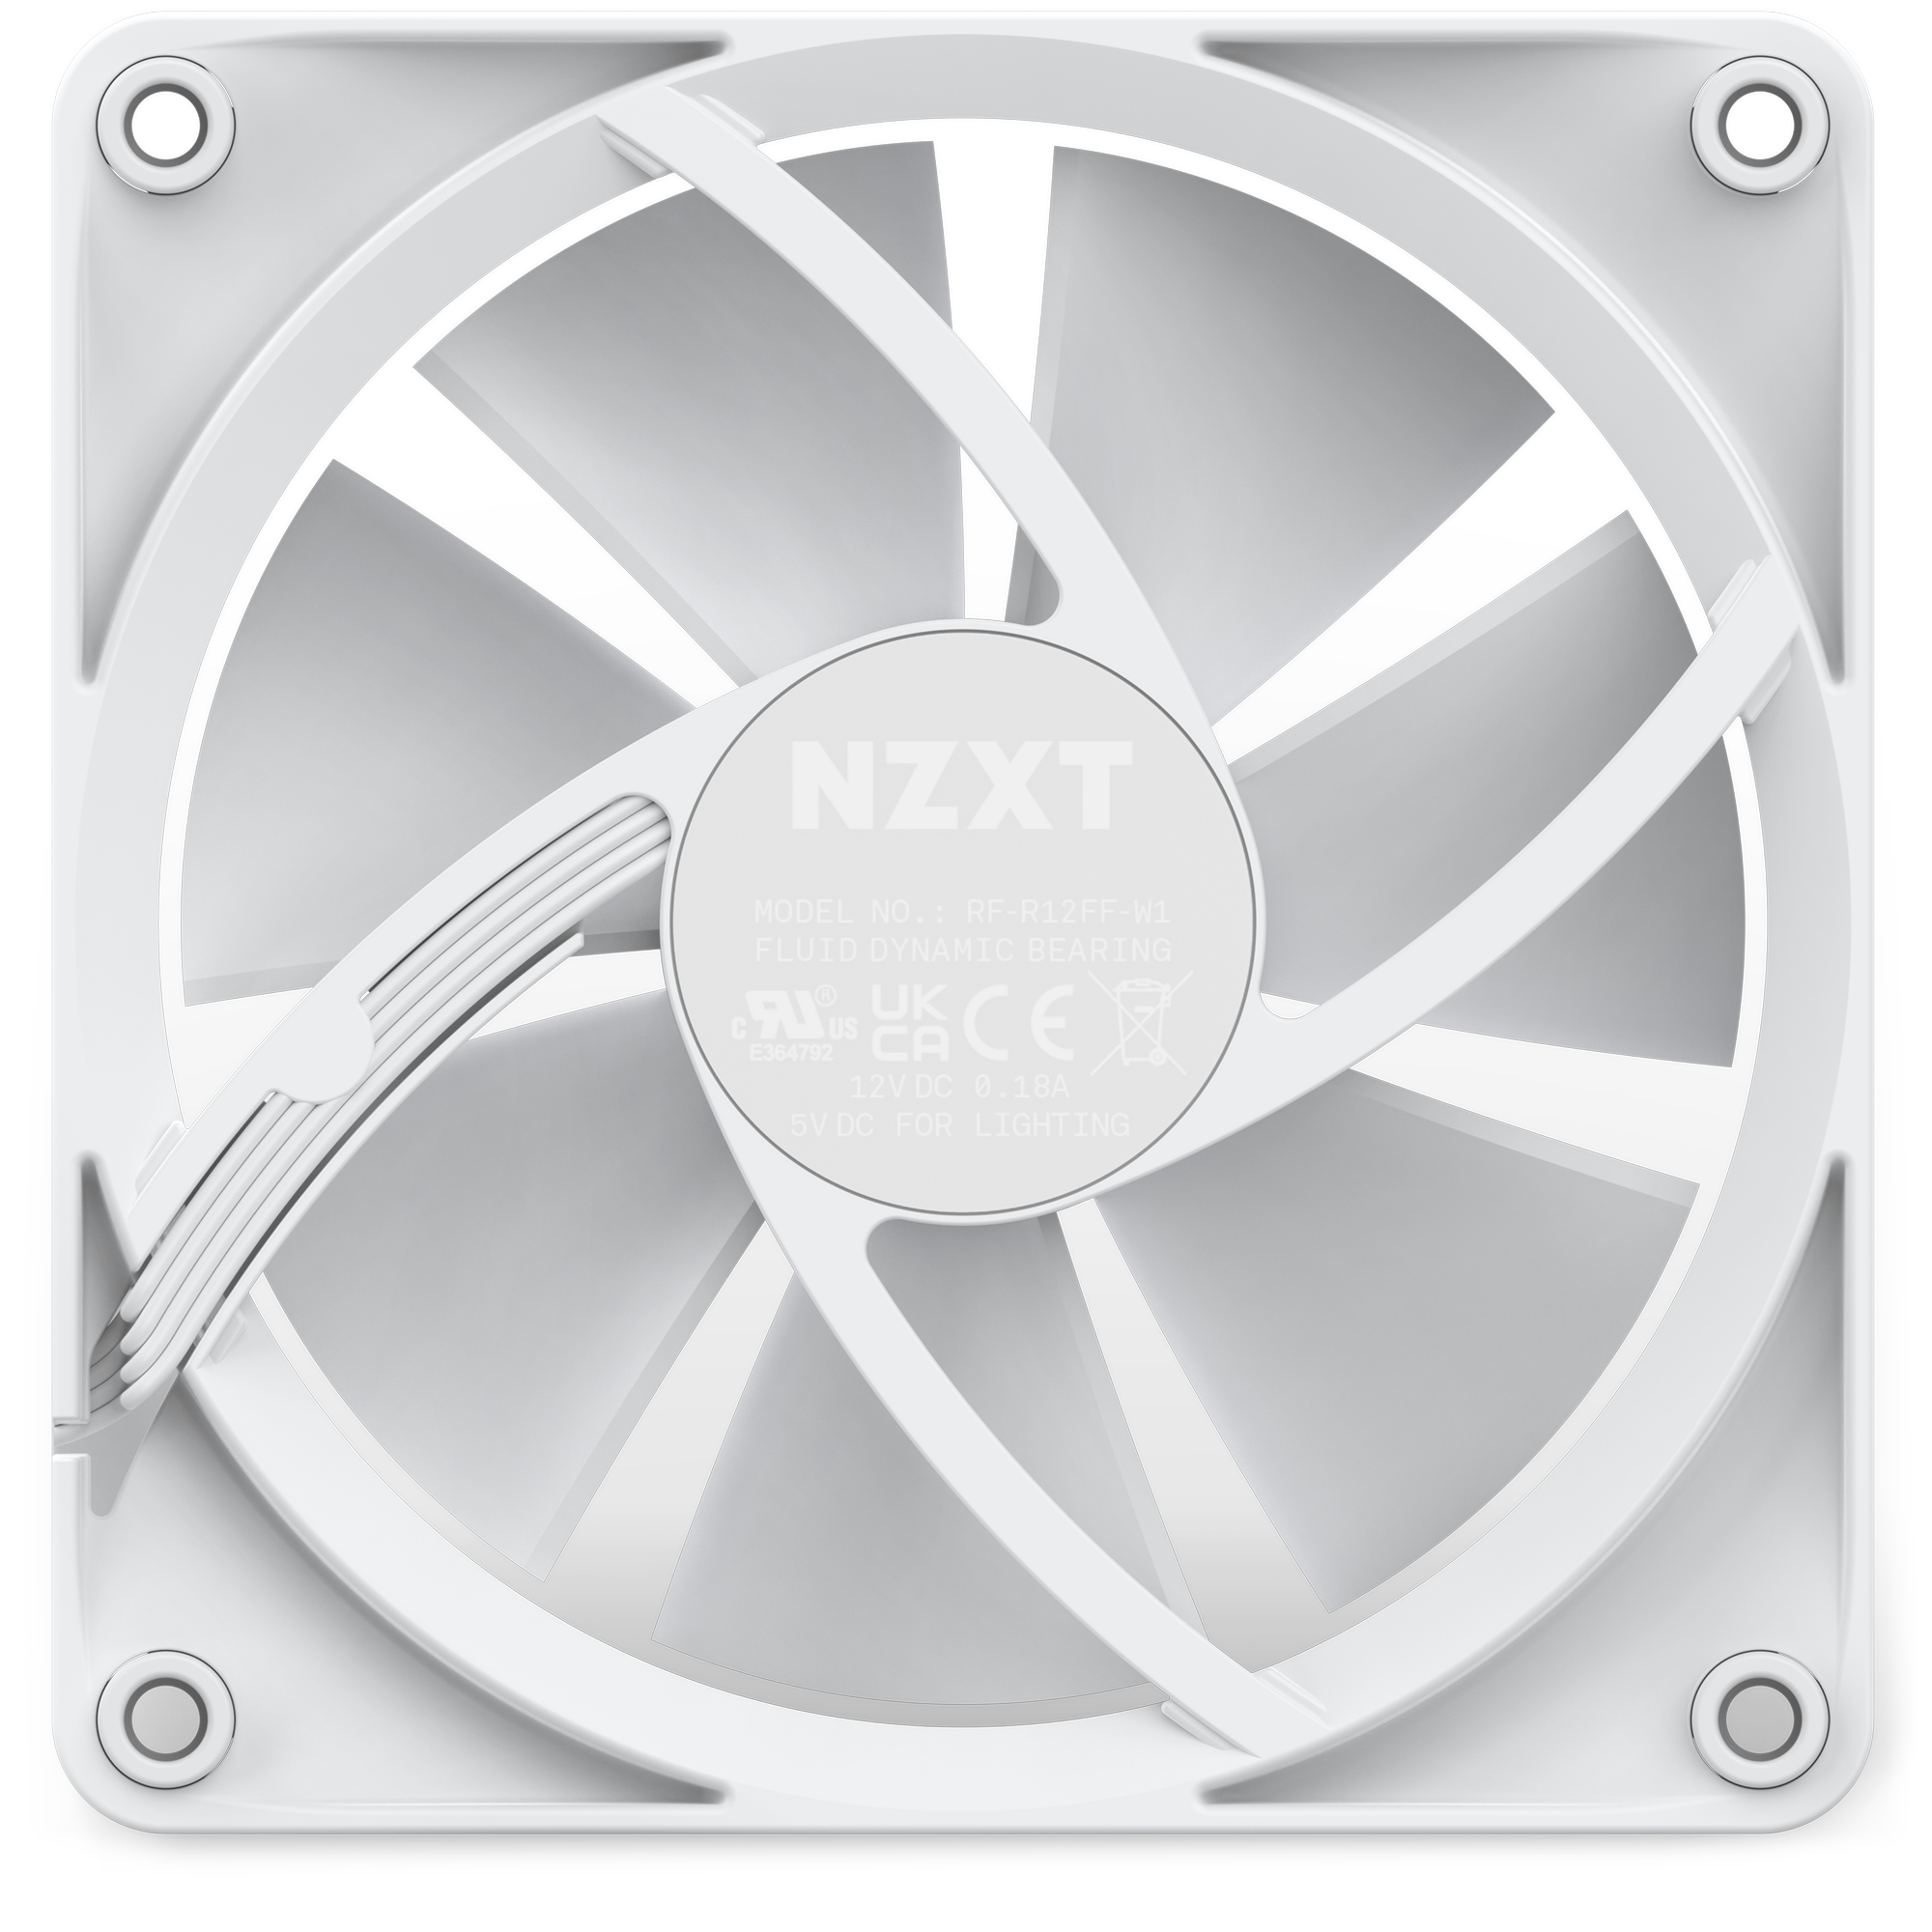 F120 RGB, 120mm PC Cooling Fan, Gaming PCs